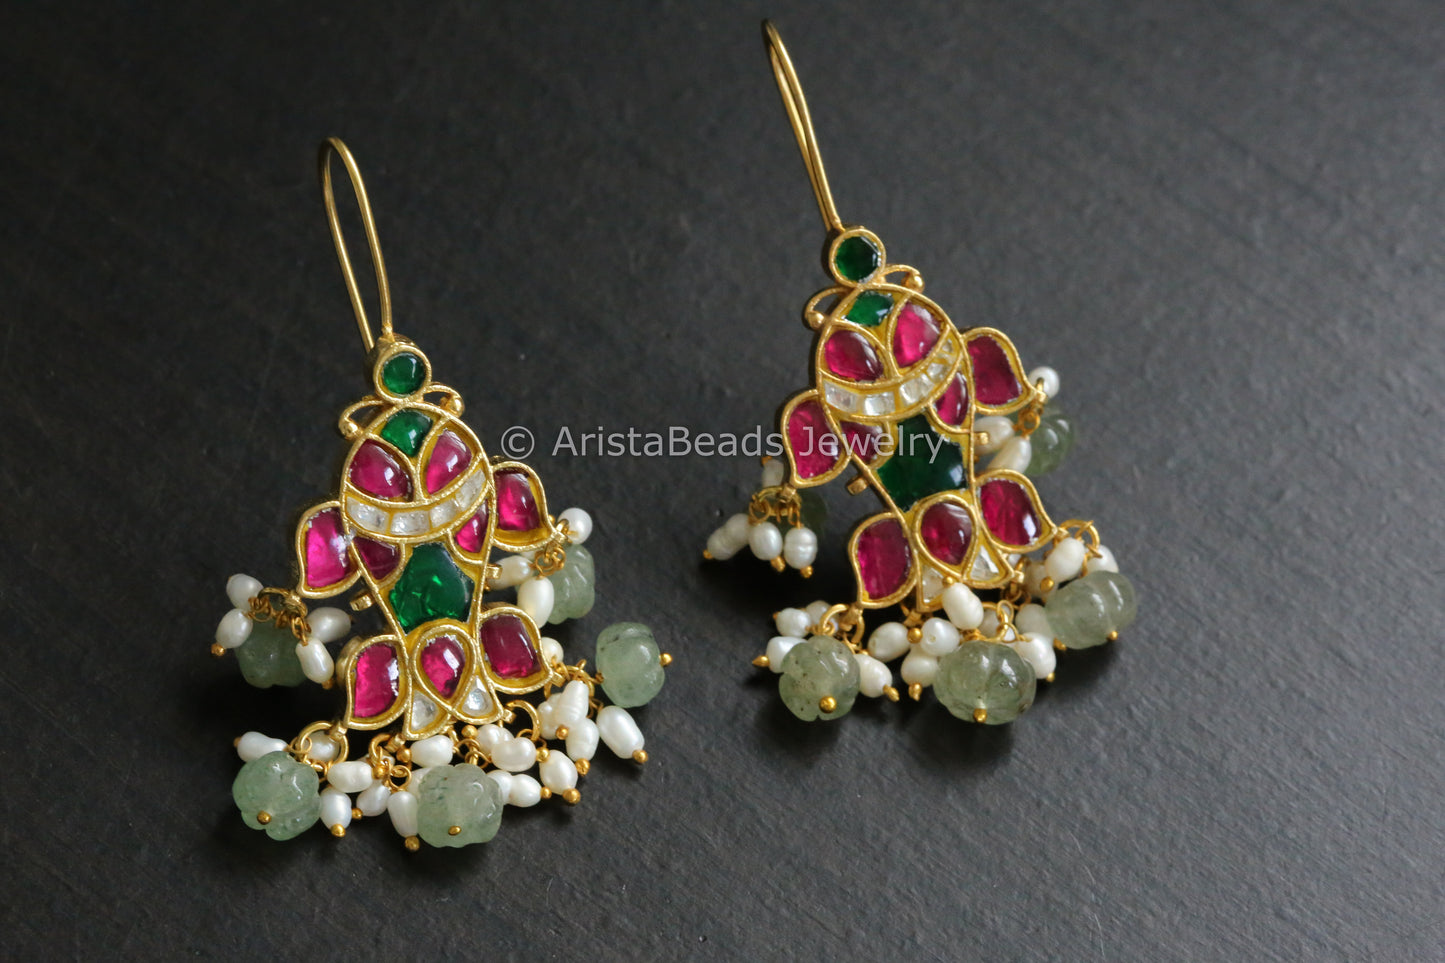 Silver Look Alike Kundan Earrings With Rice Pearls - Green Ruby